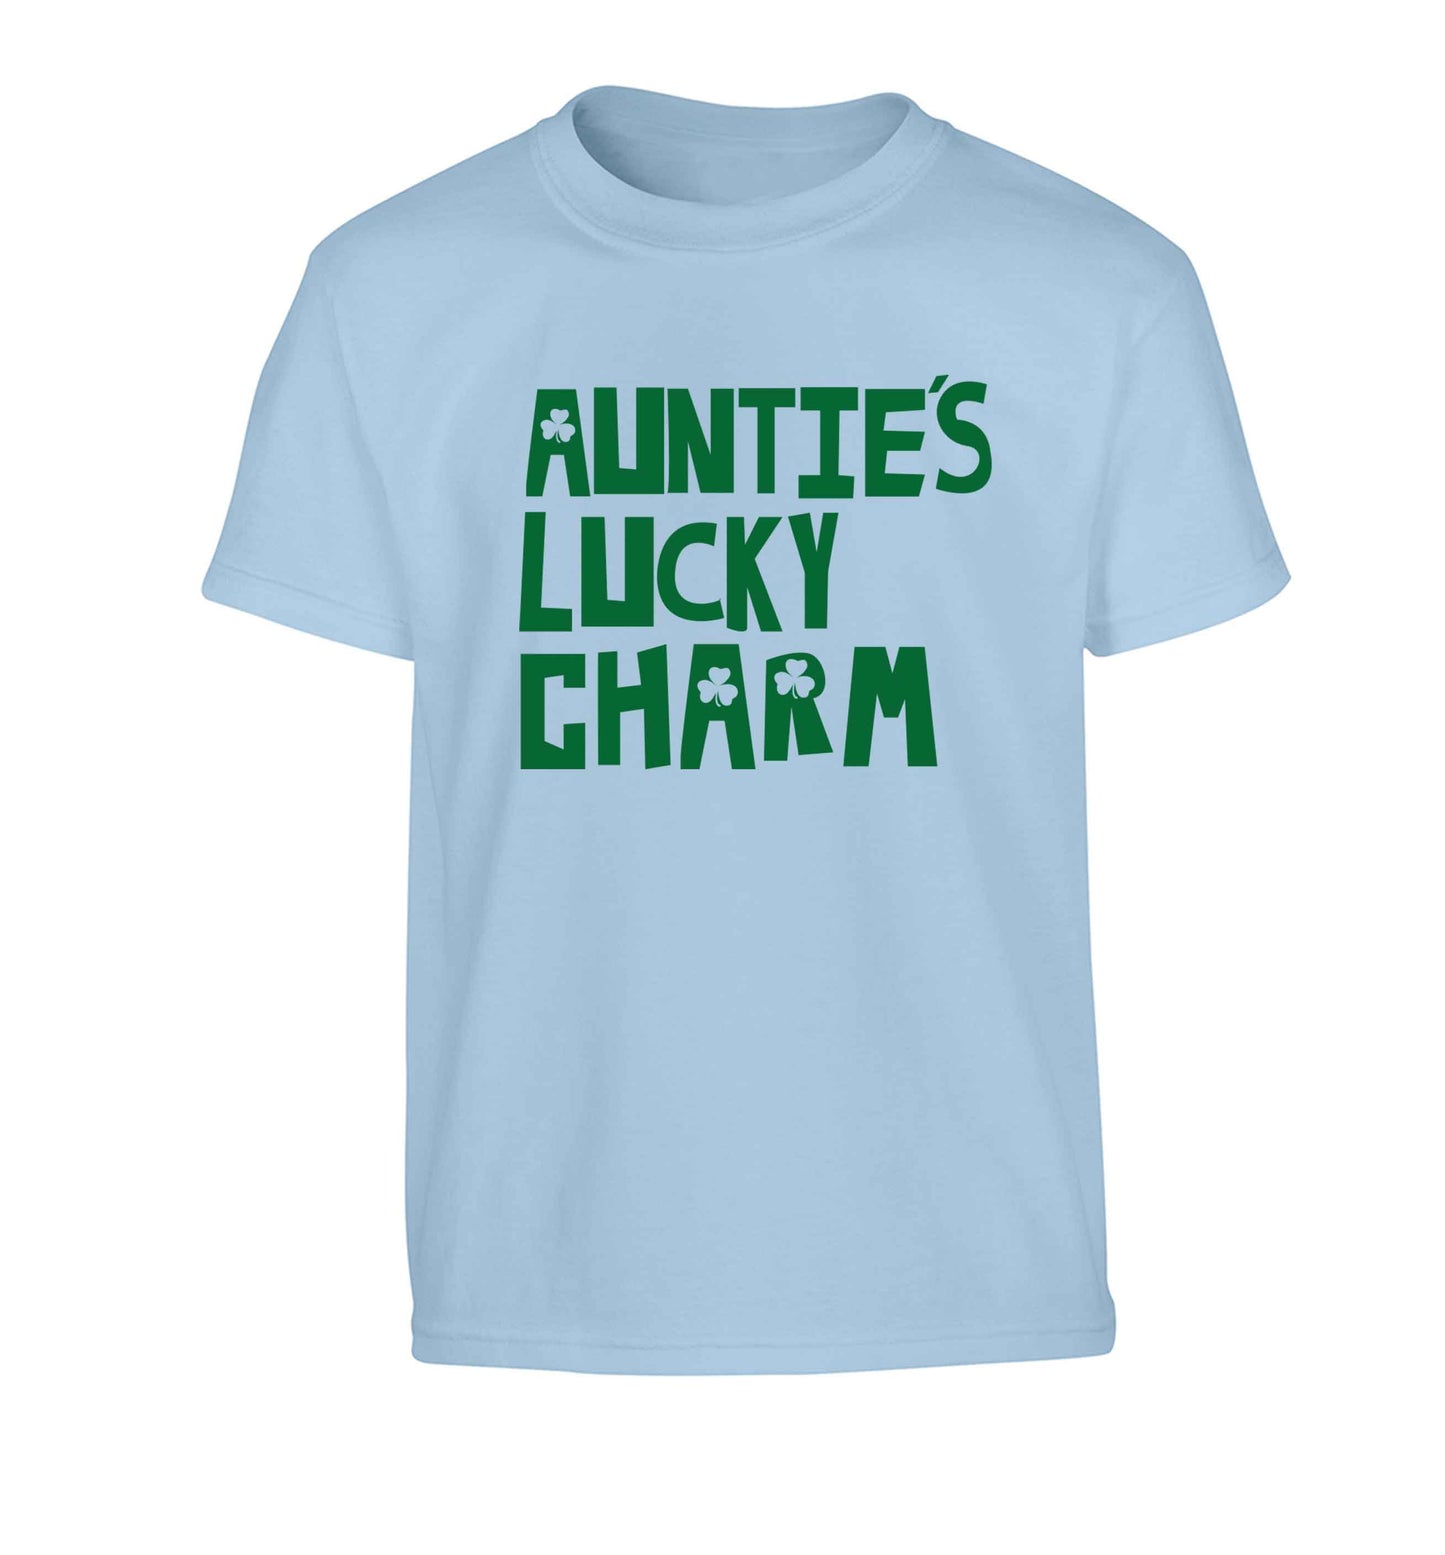 Auntie's lucky charm Children's light blue Tshirt 12-13 Years